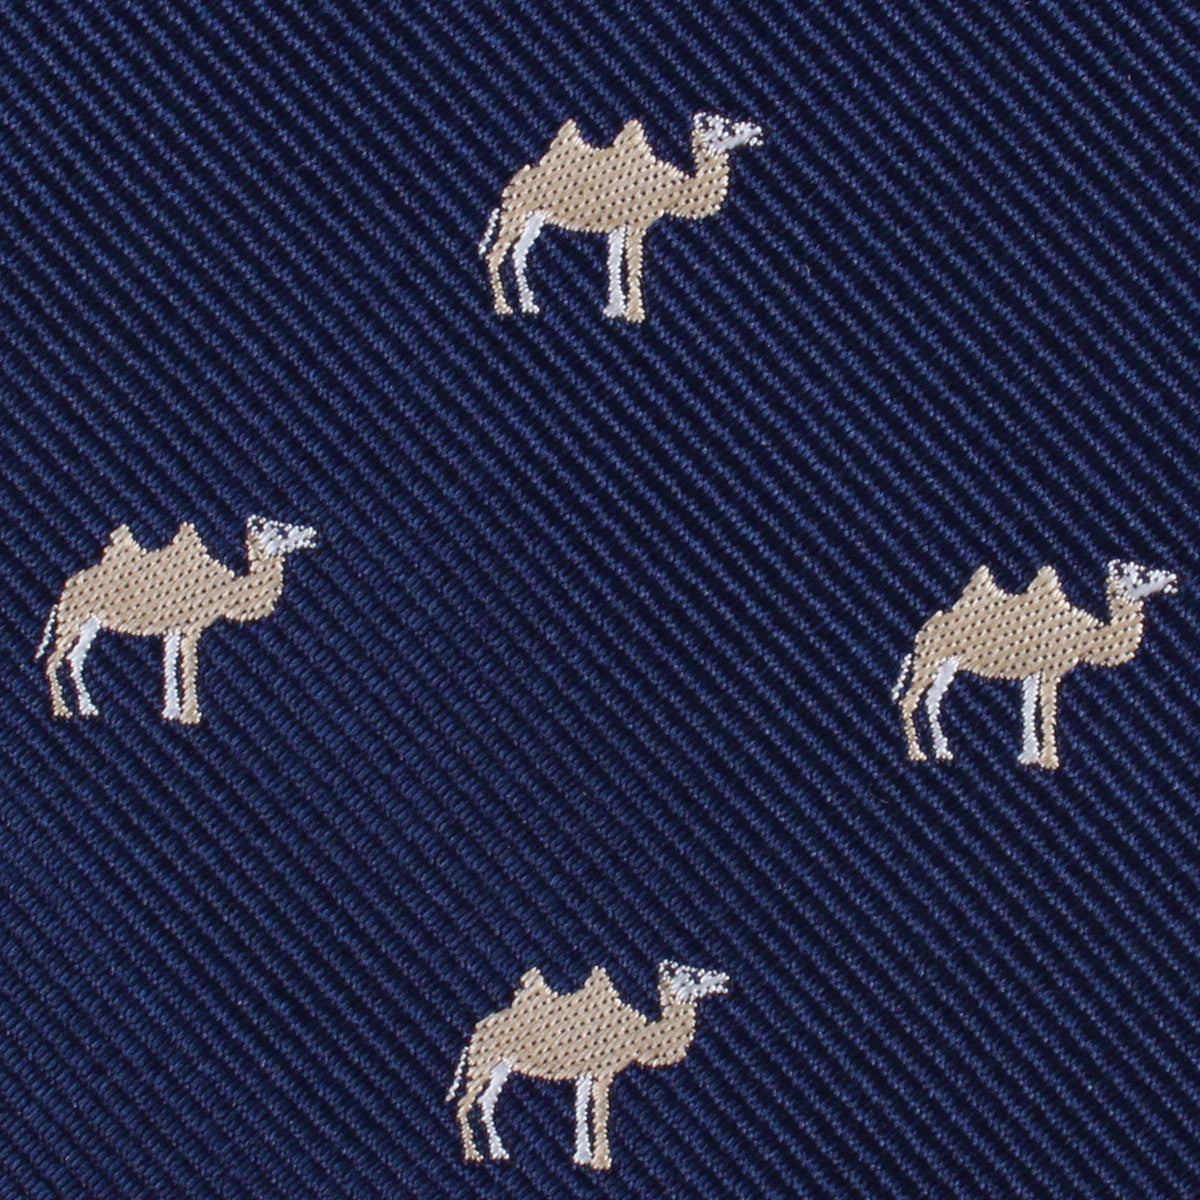 Mongolian Camel Fabric Kids Bowtie